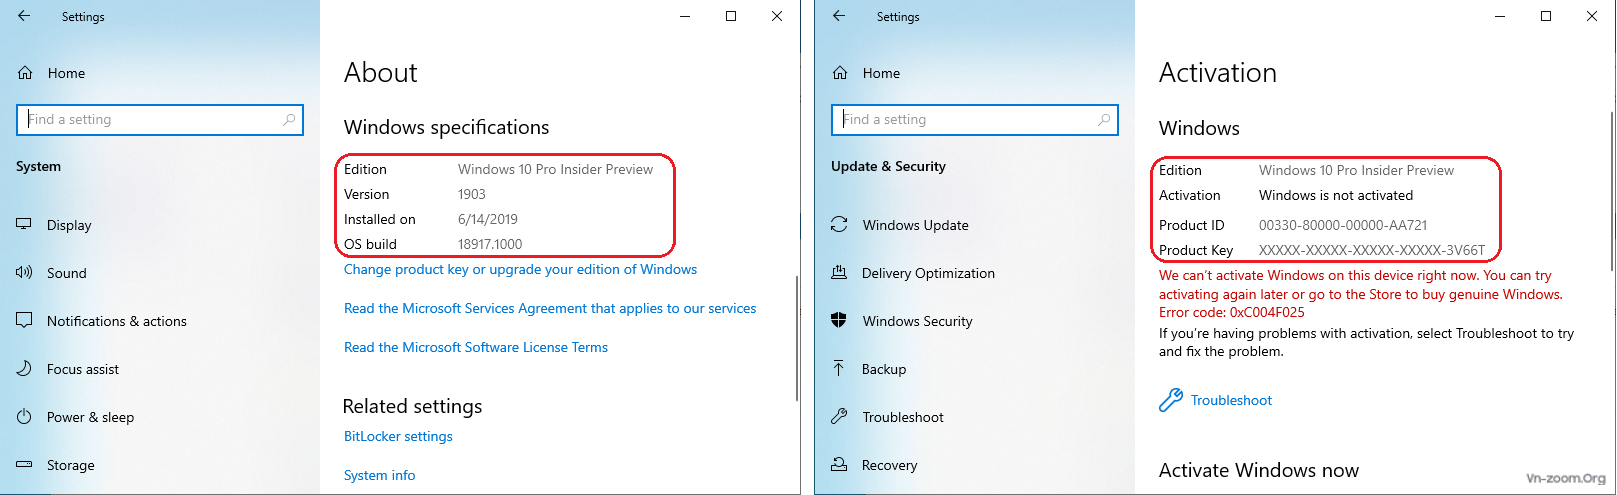 windows 10 pro insider preview key